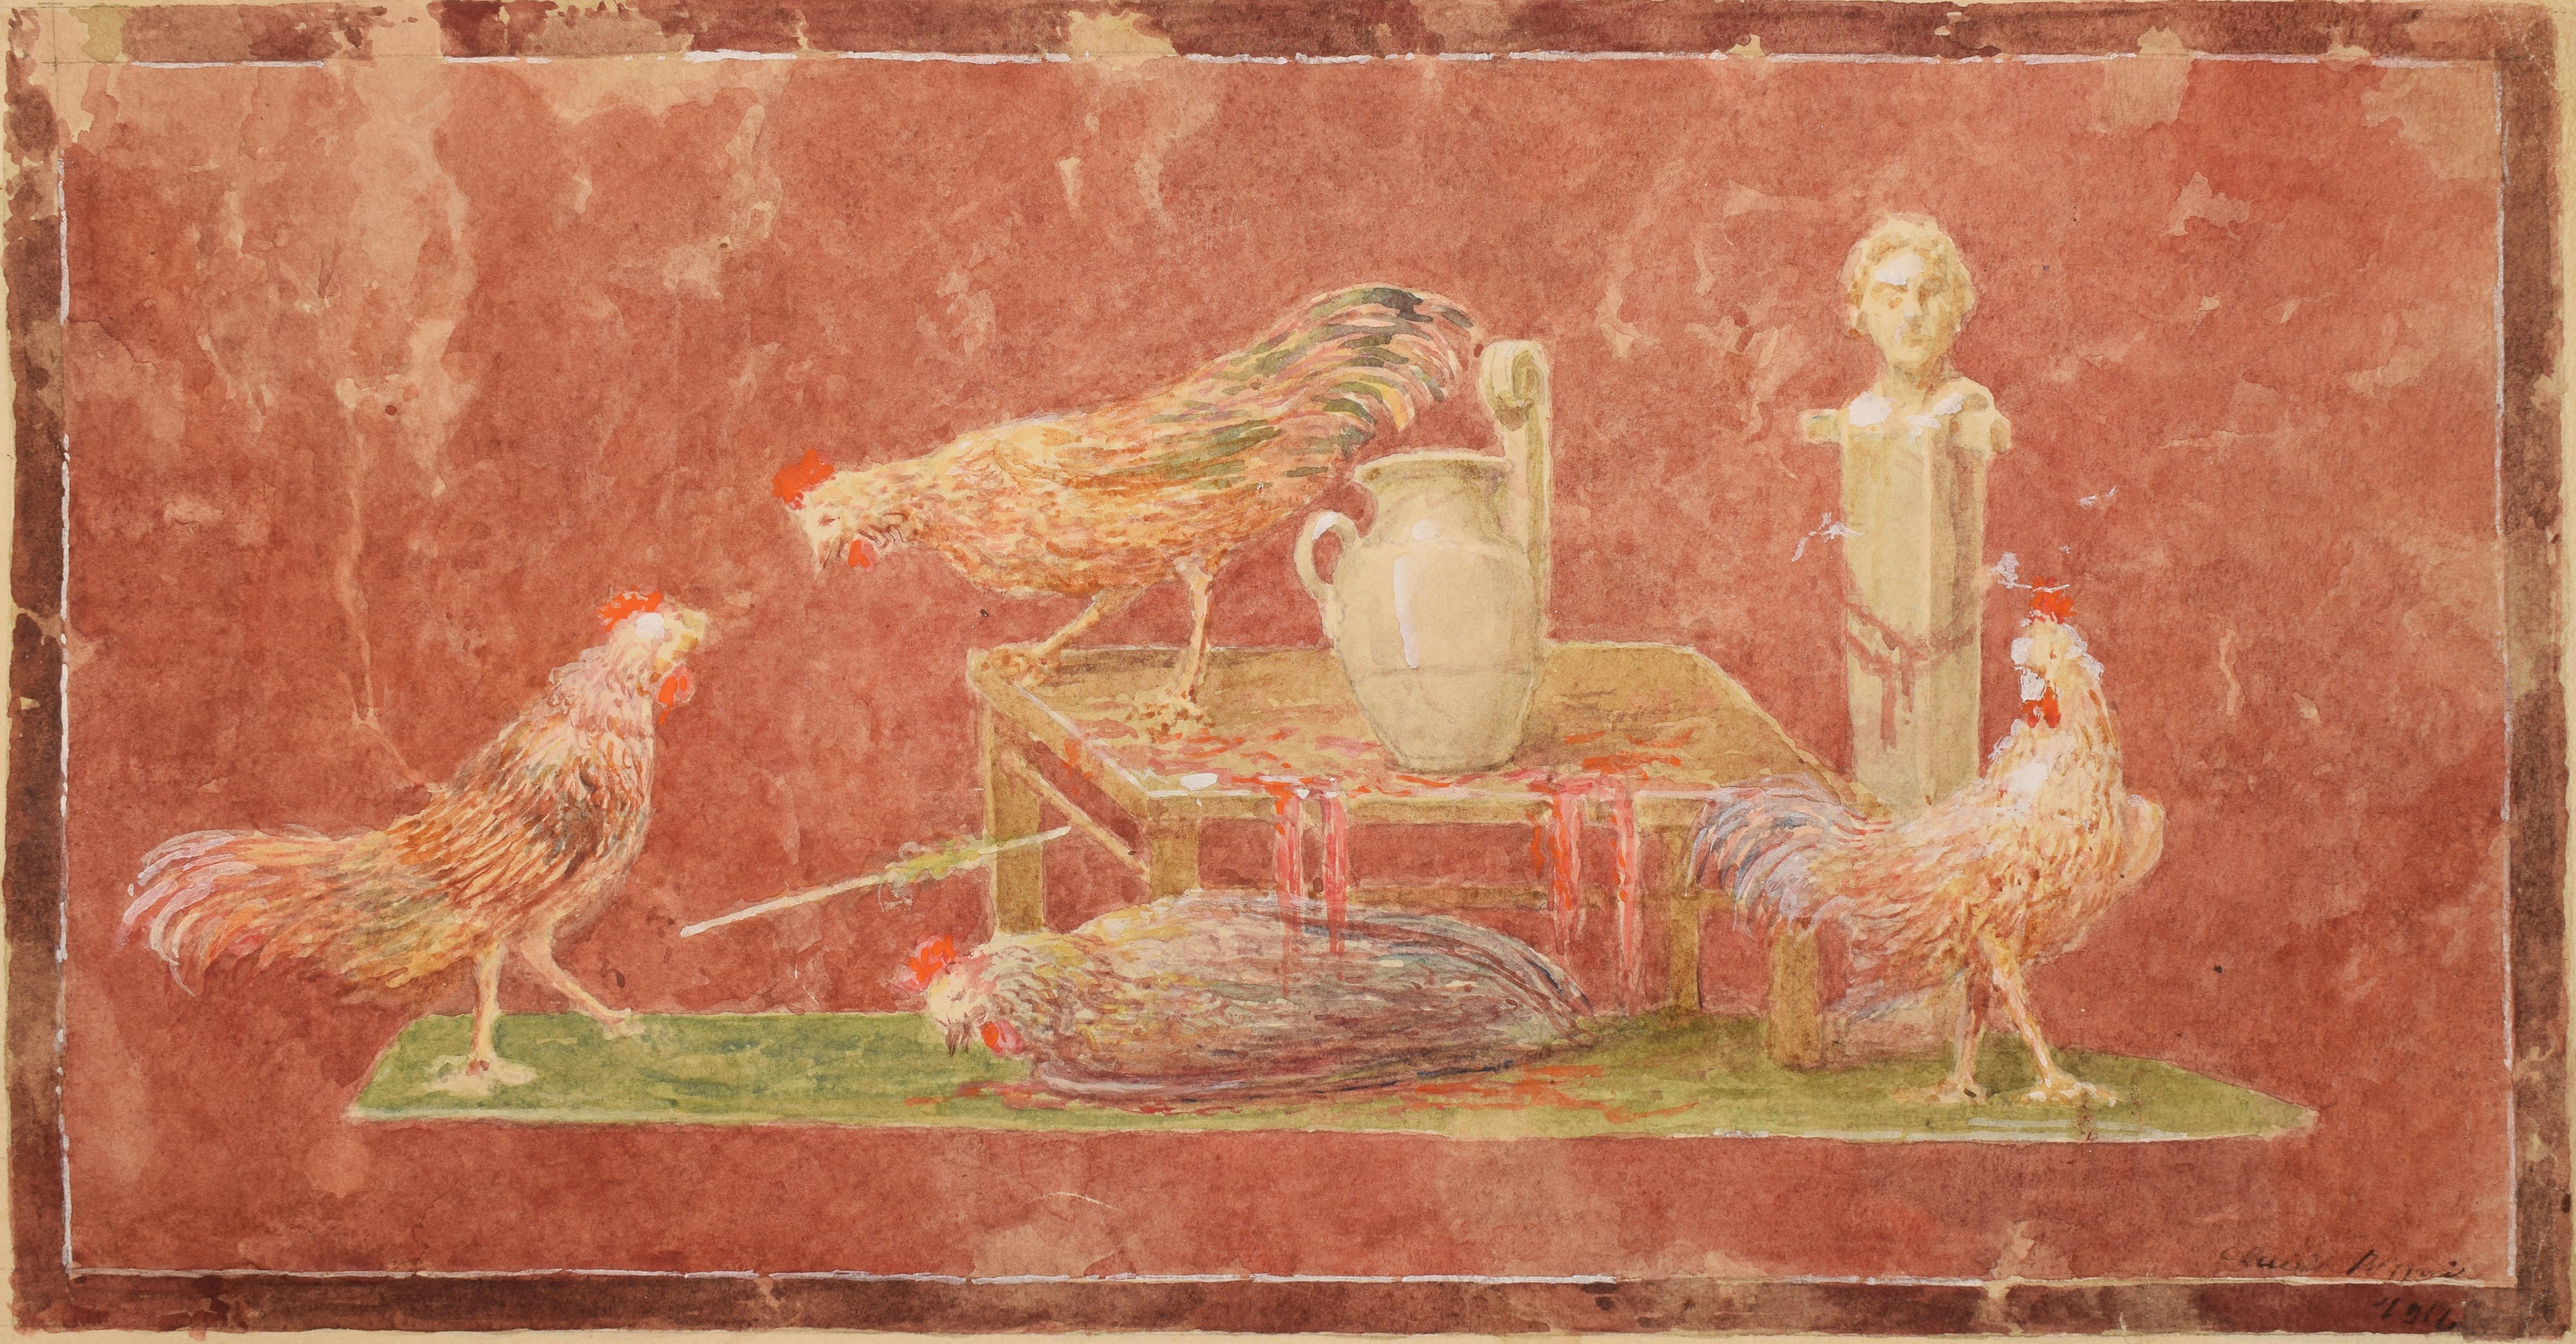 Luigi Bazzani Animal Art - Affresco romano con fontana, galli ed erma